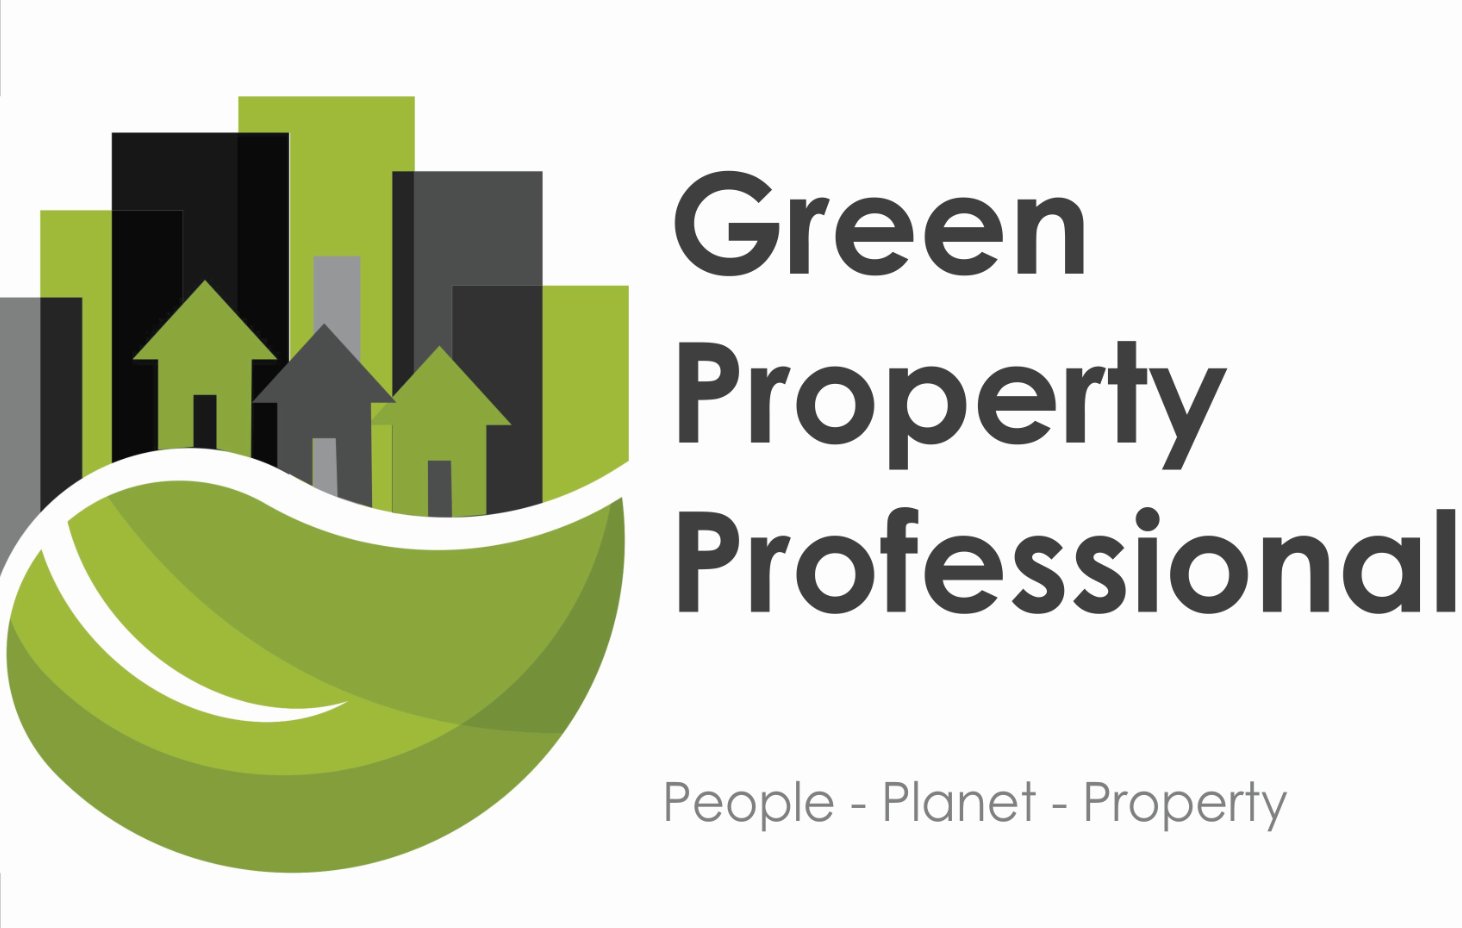 Green Property Professionals